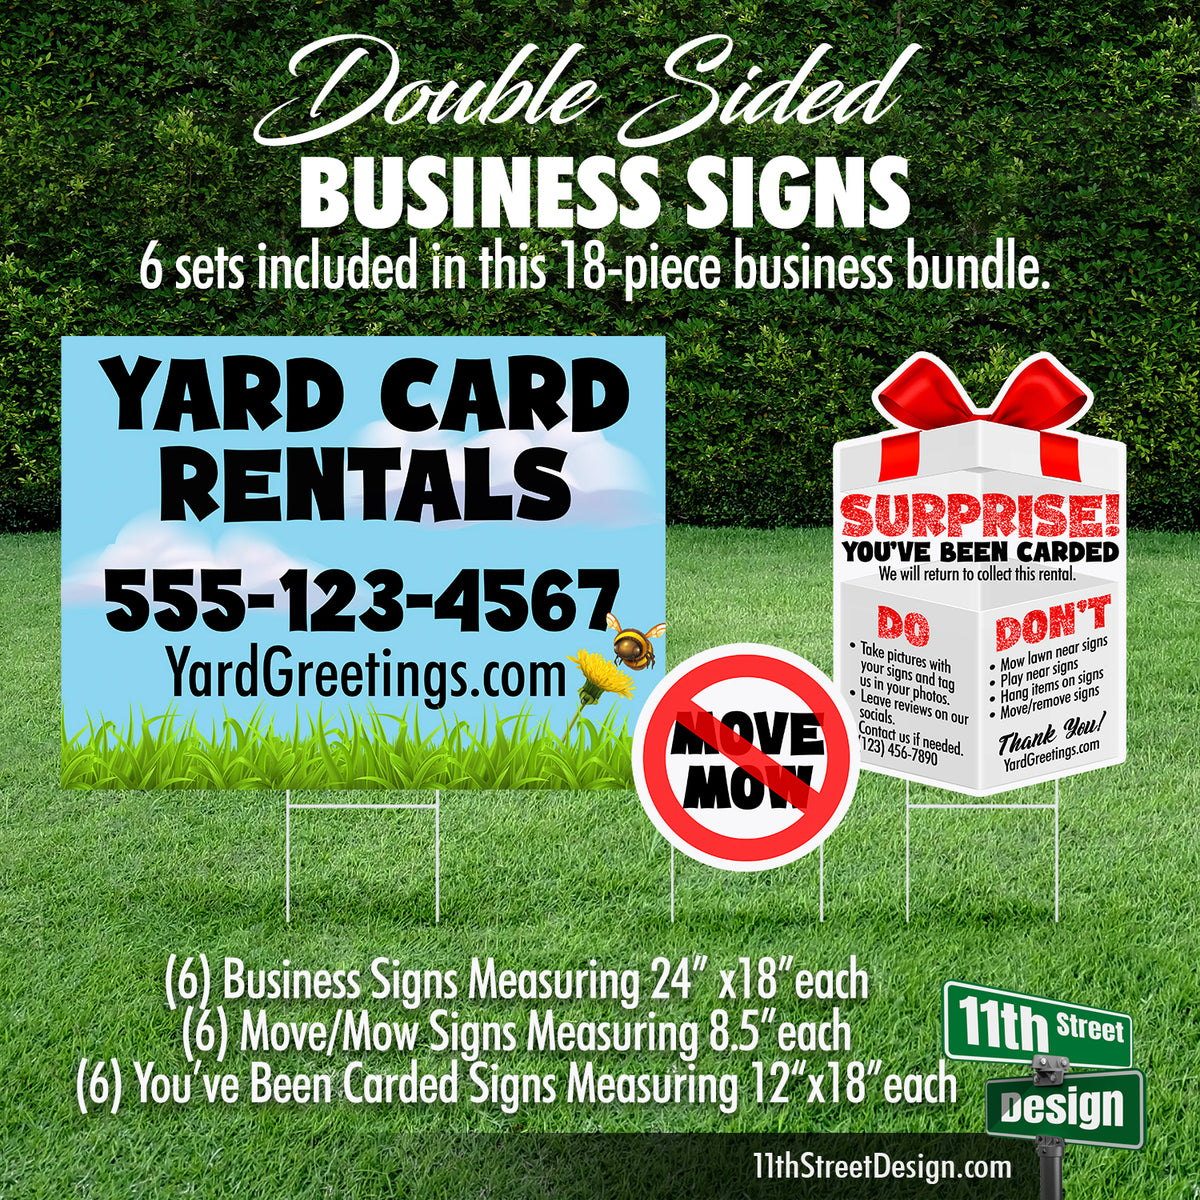 Yard Card Business Sign Bundle